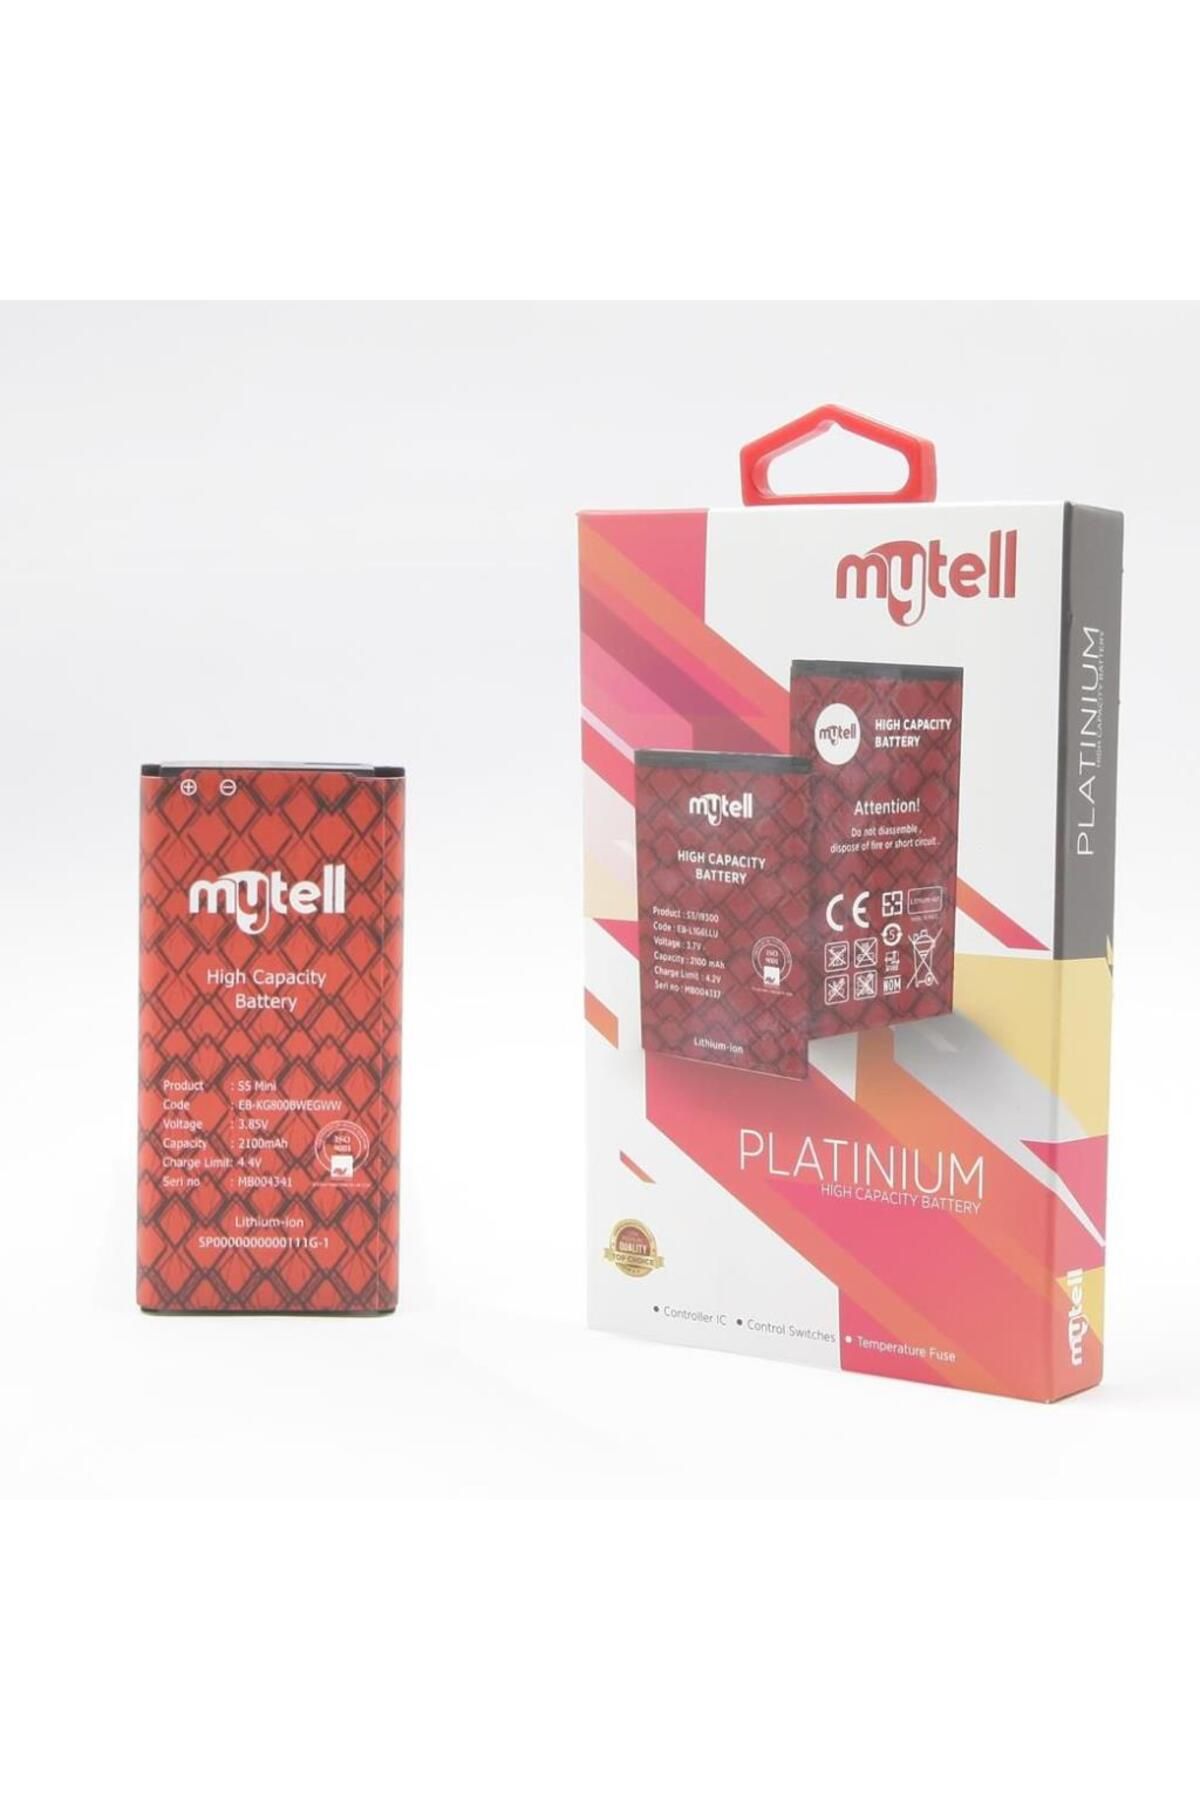 Mytell Galaxy S5 Mini Ile Uyumlu Mbt-01 Batarya